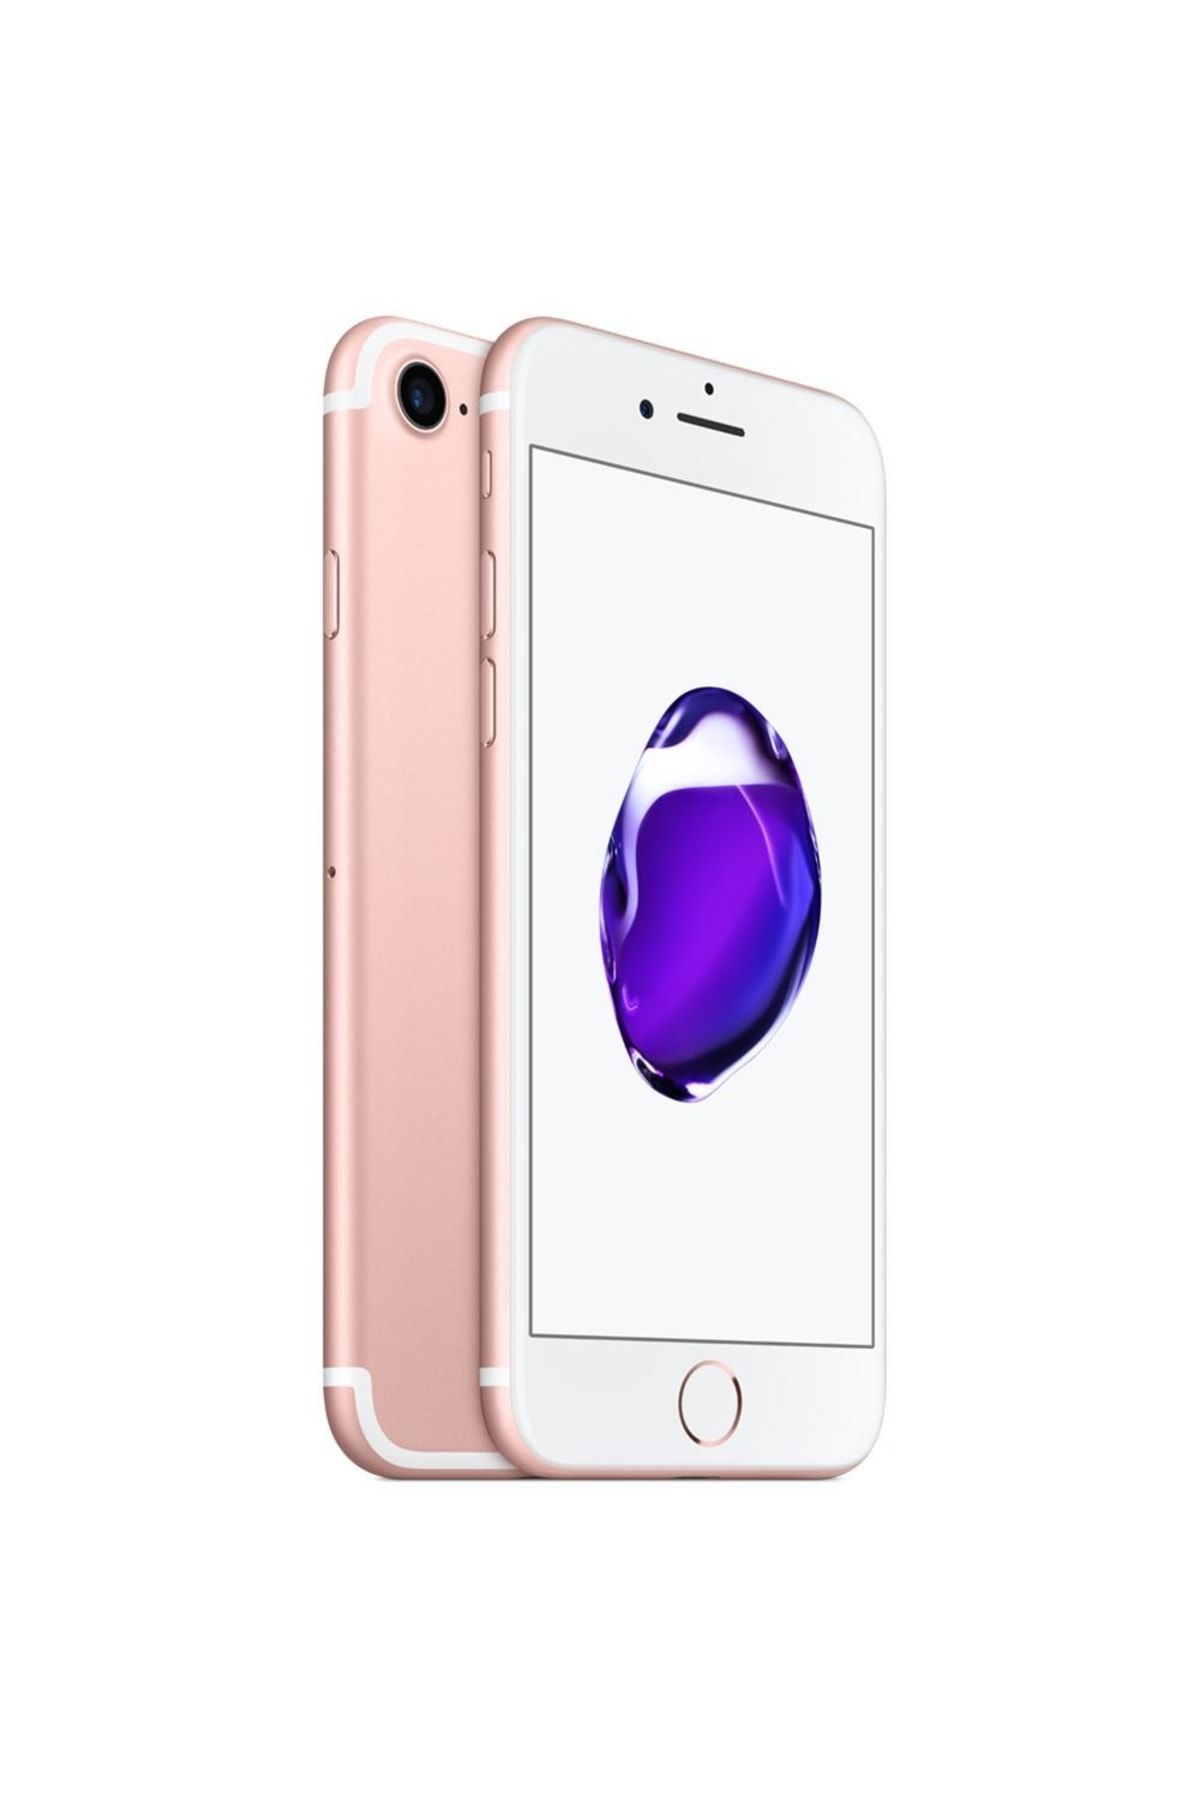 Apple Yenilenmiş iPhone 7 32 GB Rose Gold Cep Telefonu (12 Ay Garantili) - B Kalite